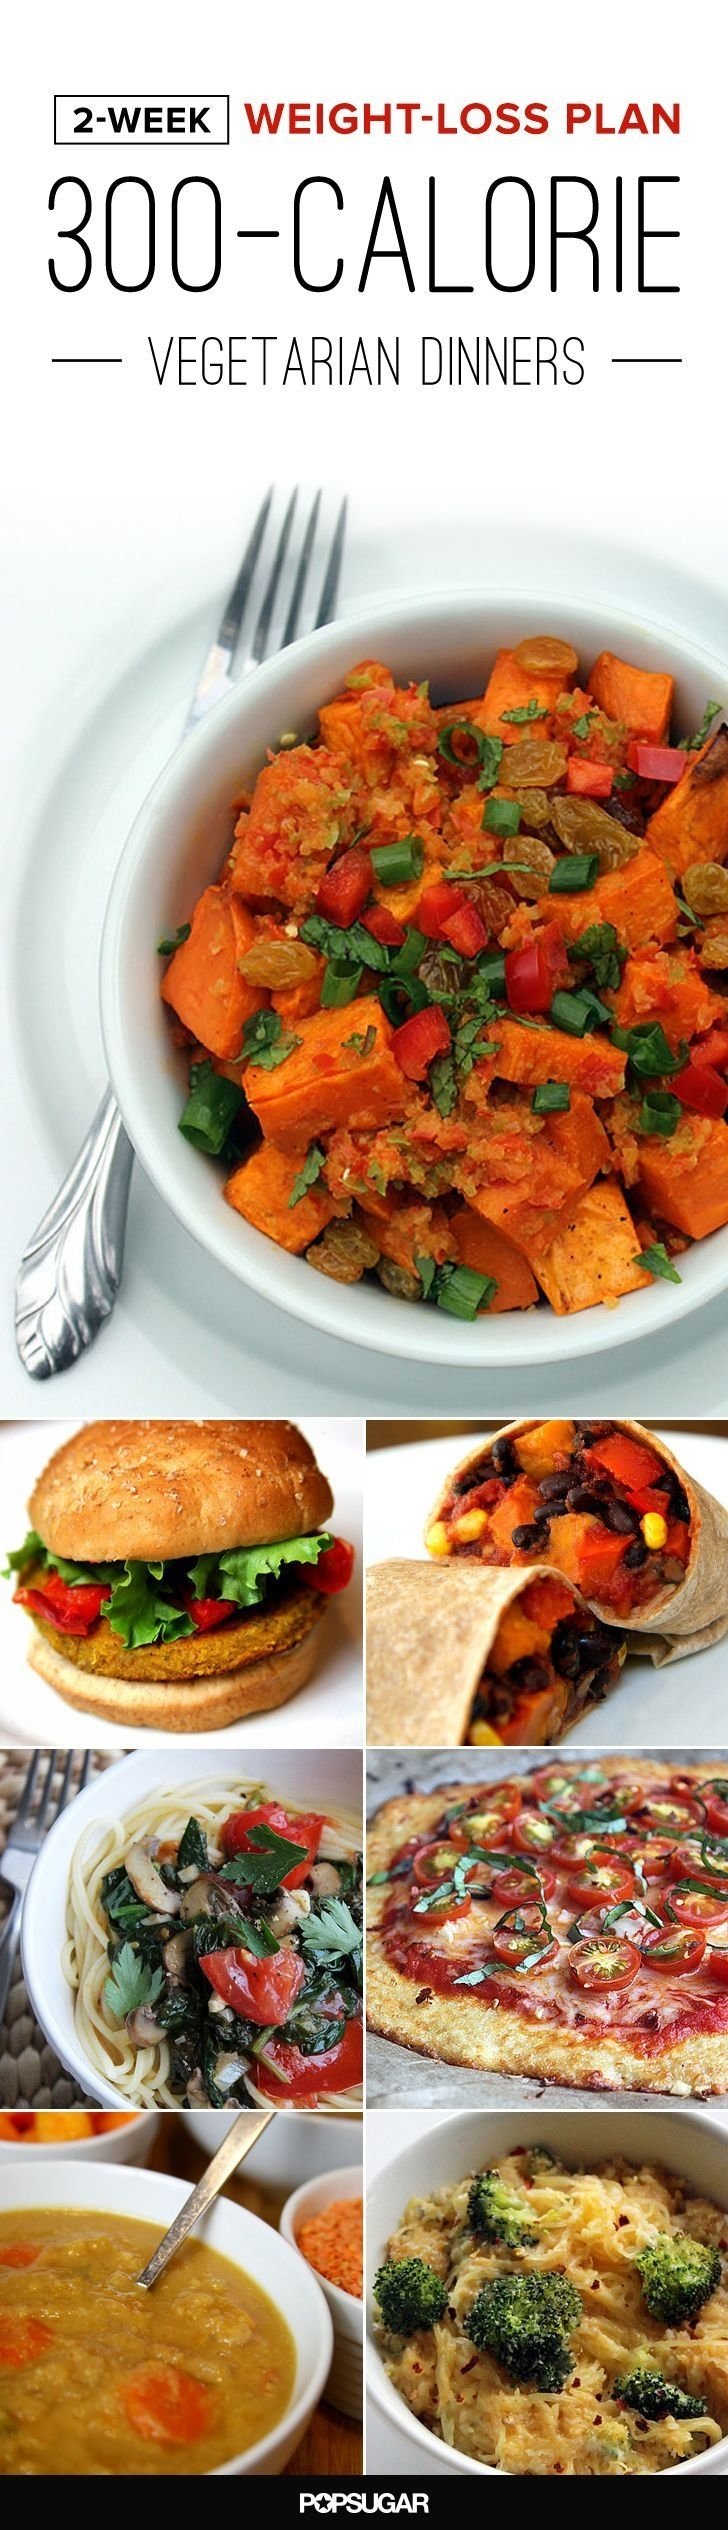 10 Amazing Vegetarian Dinner Ideas For Two 2 week meal plan vegetarian dinners under 300 calories 300 2023